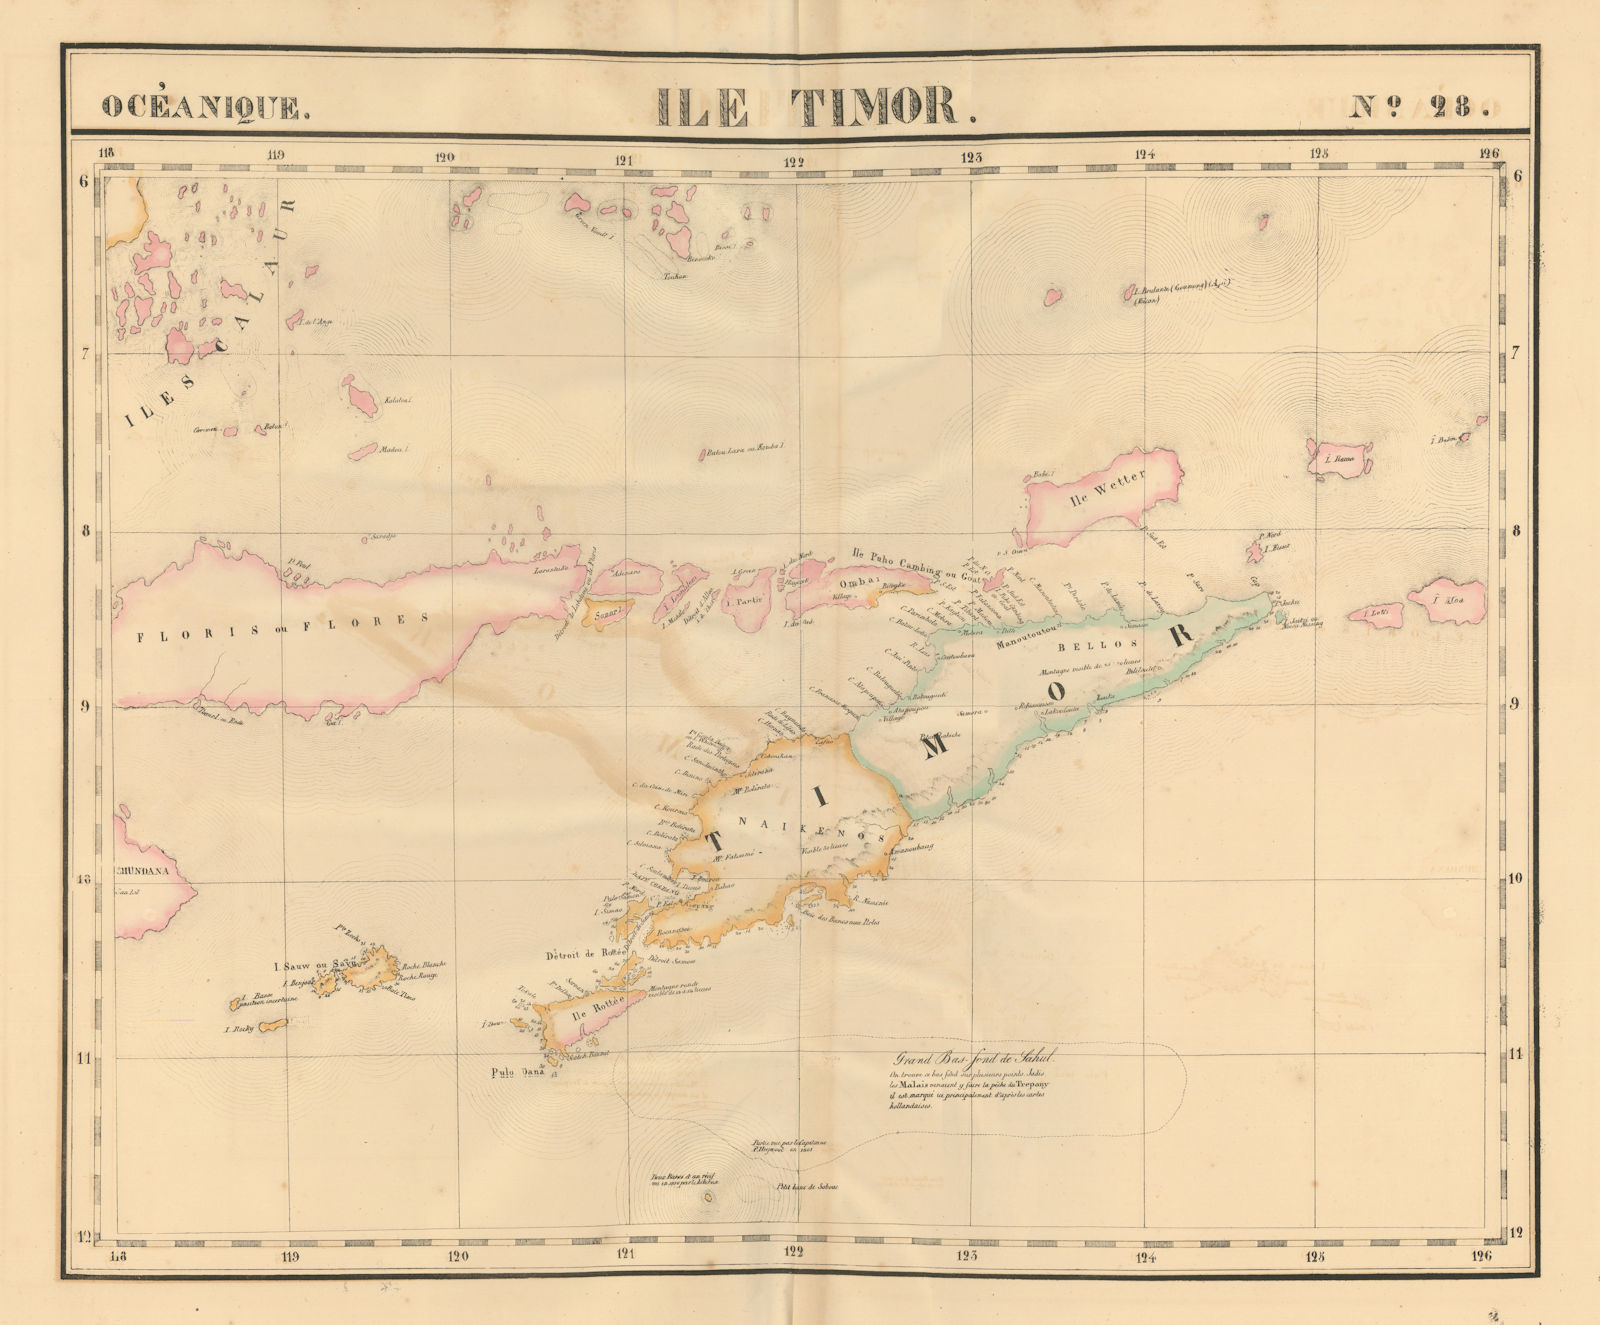 Associate Product Océanique. Ile Timor #28. Flores. Lesser Sunda Islands. VANDERMAELEN 1827 map